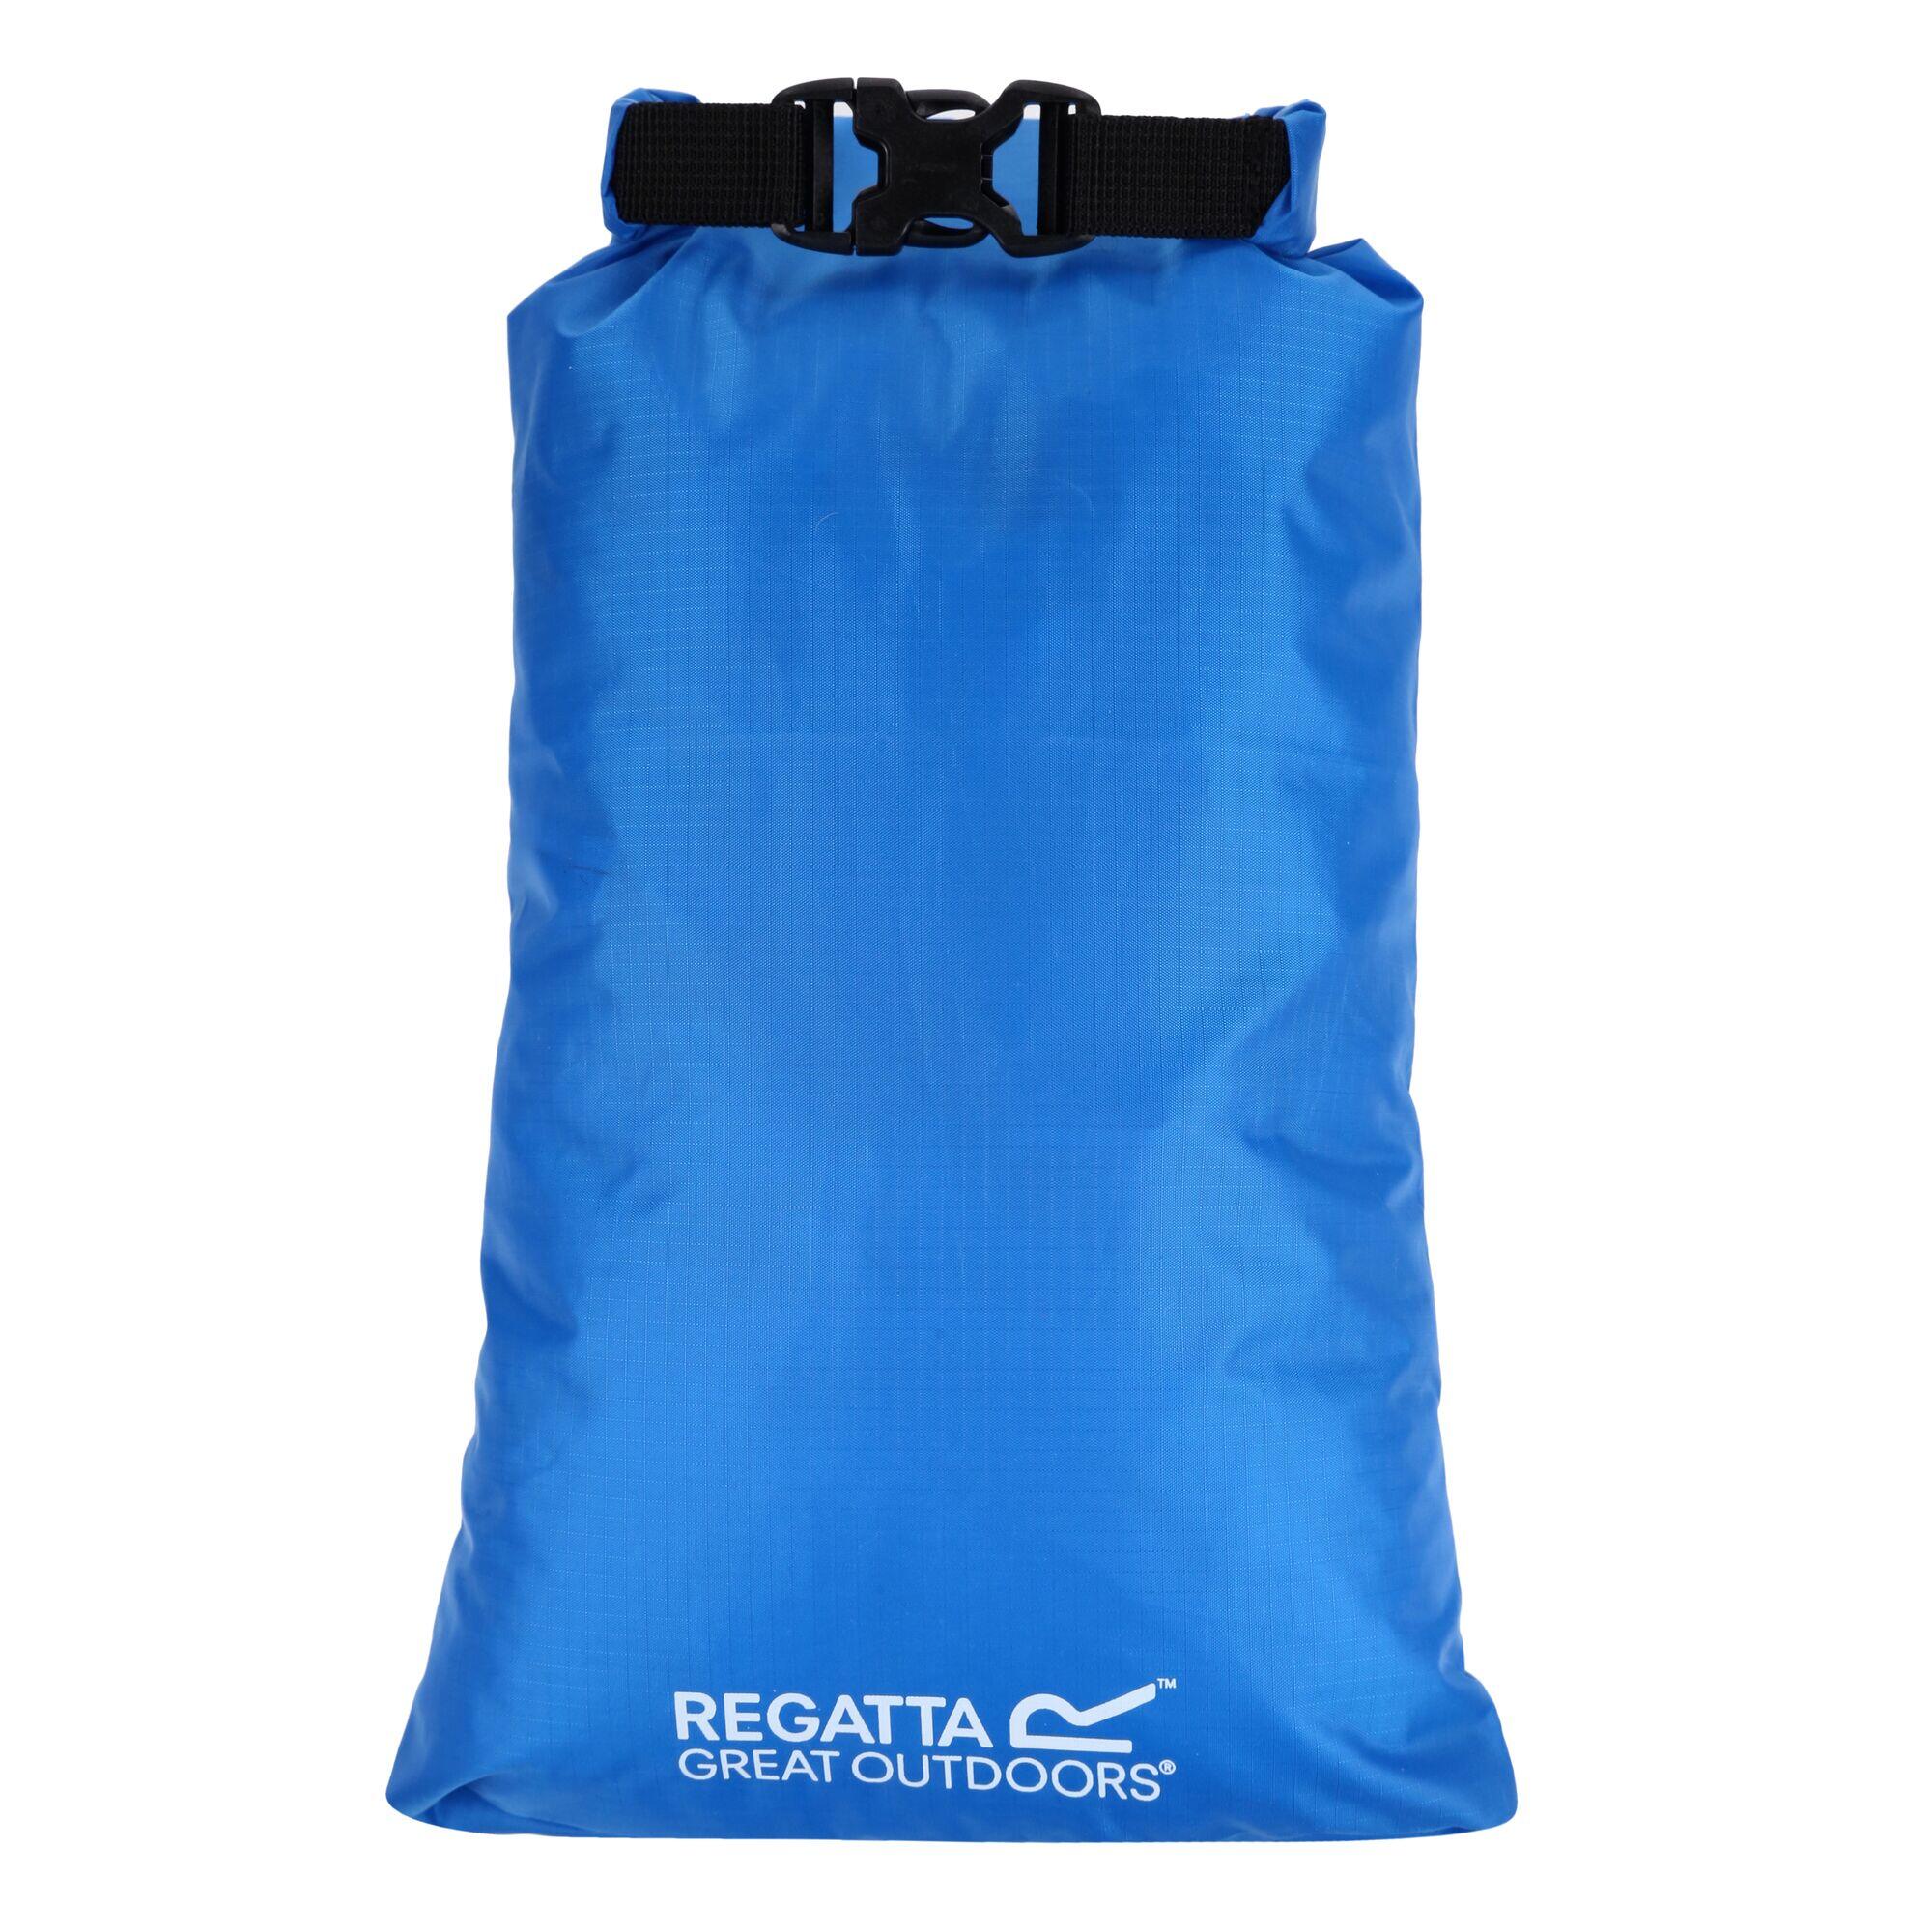 REGATTA 2L Dry Bag Adults' Unisex Hiking Bag - Oxford Blue